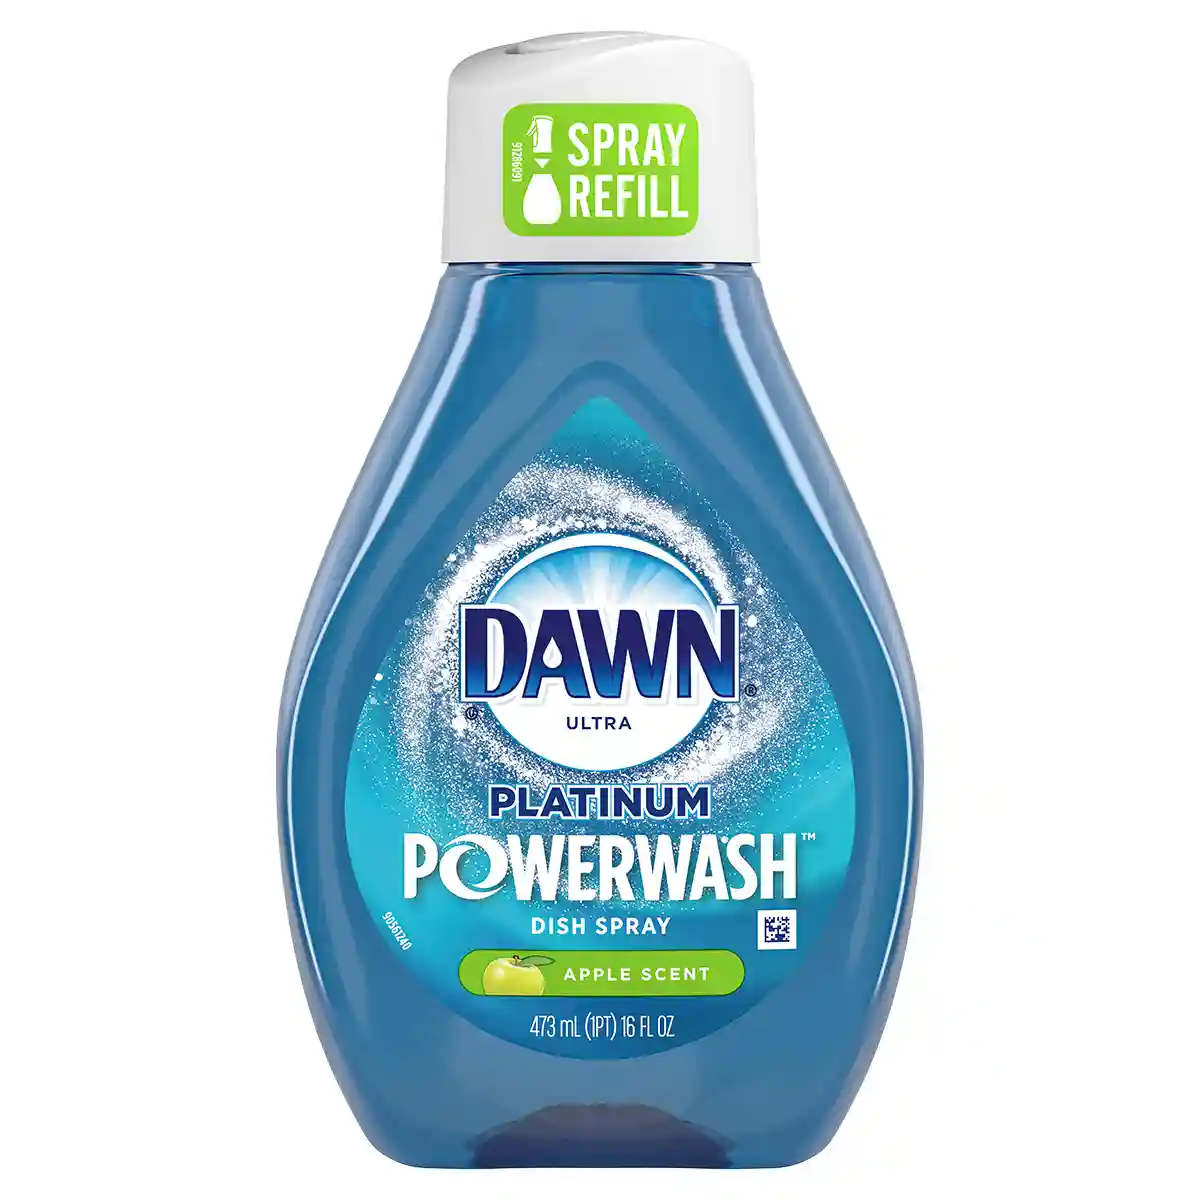 Dawn Platinum Powerwash Dish Spray Refill, Apple Scent 16 oz